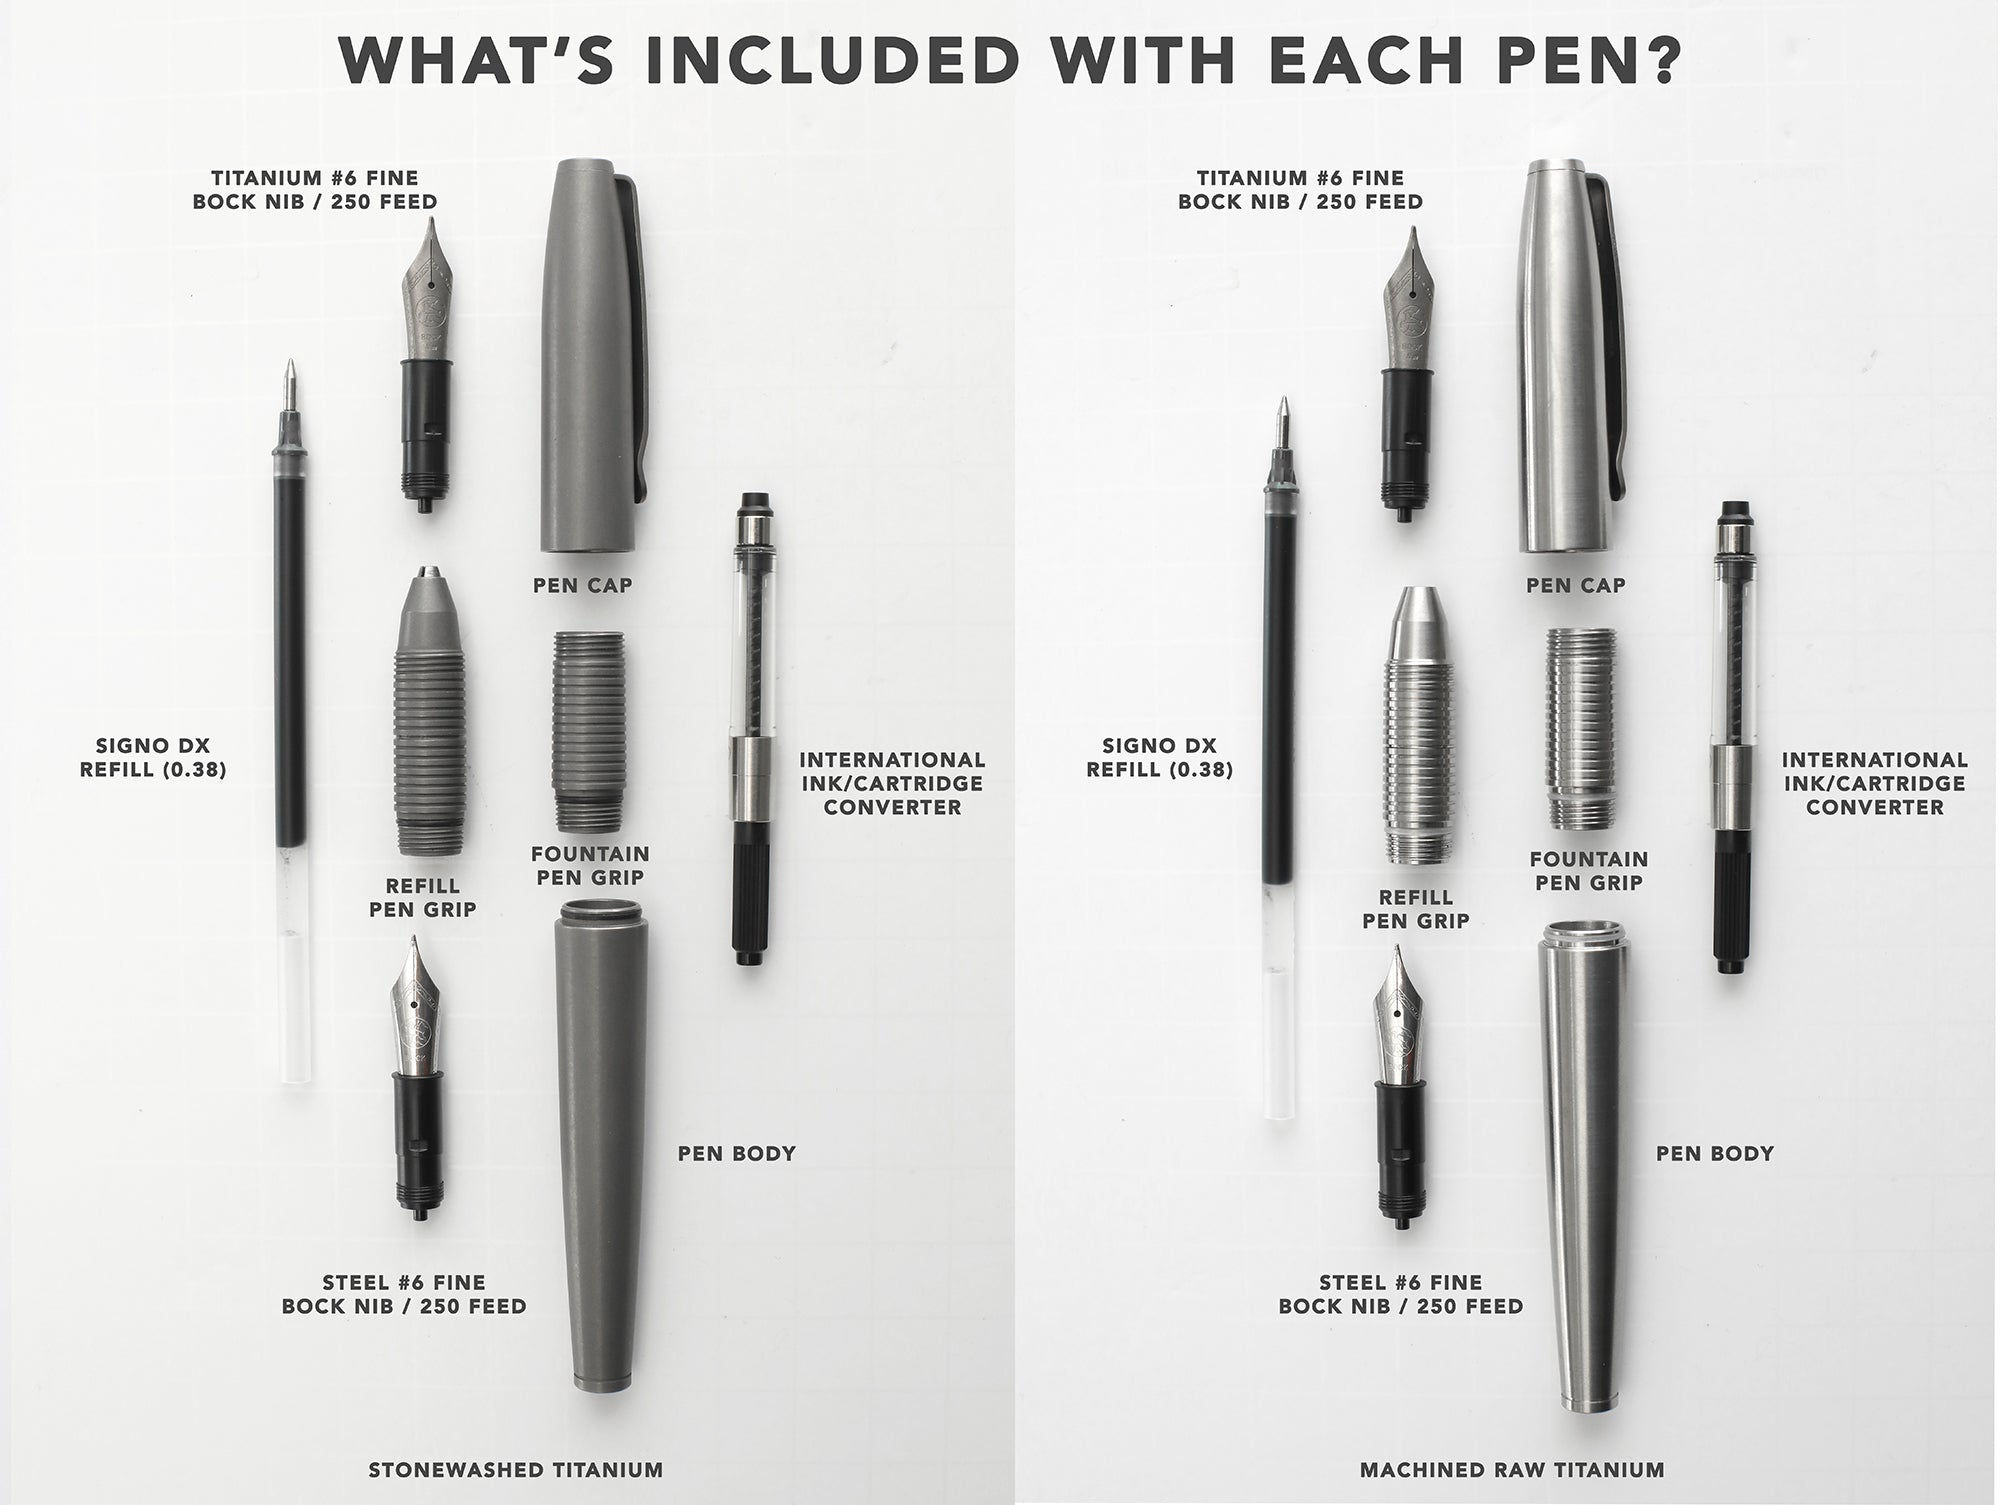 Conception de grande idée - Ti Ultra Pen